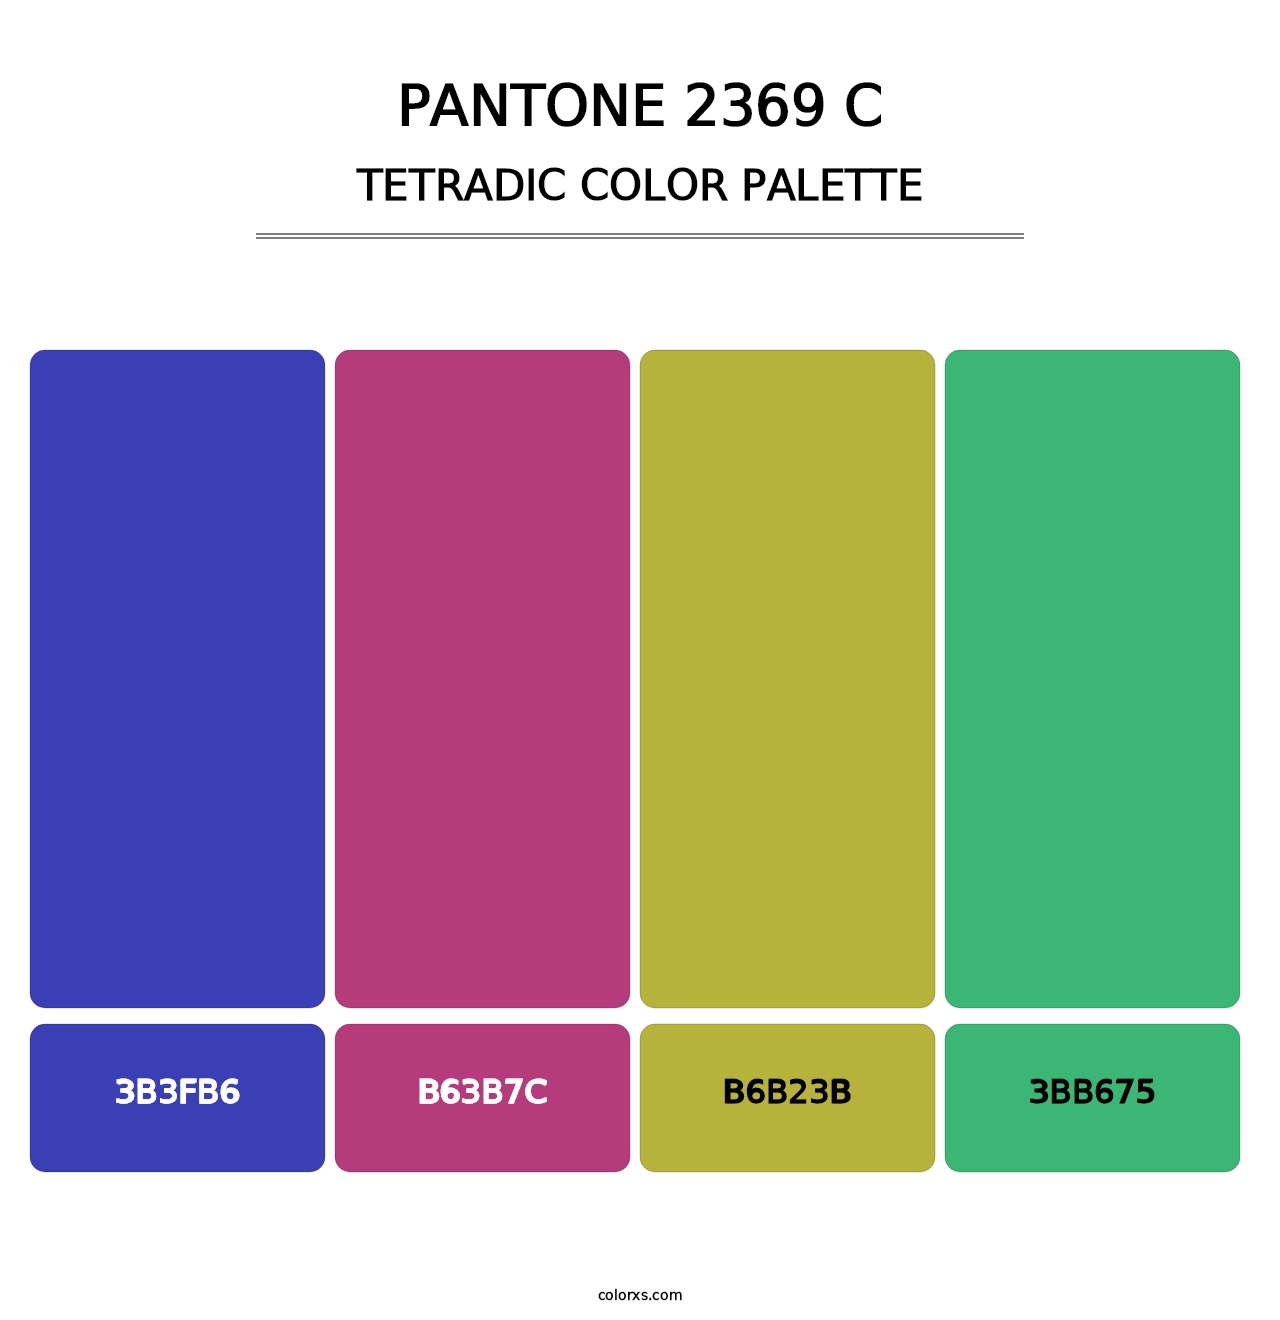 PANTONE 2369 C - Tetradic Color Palette